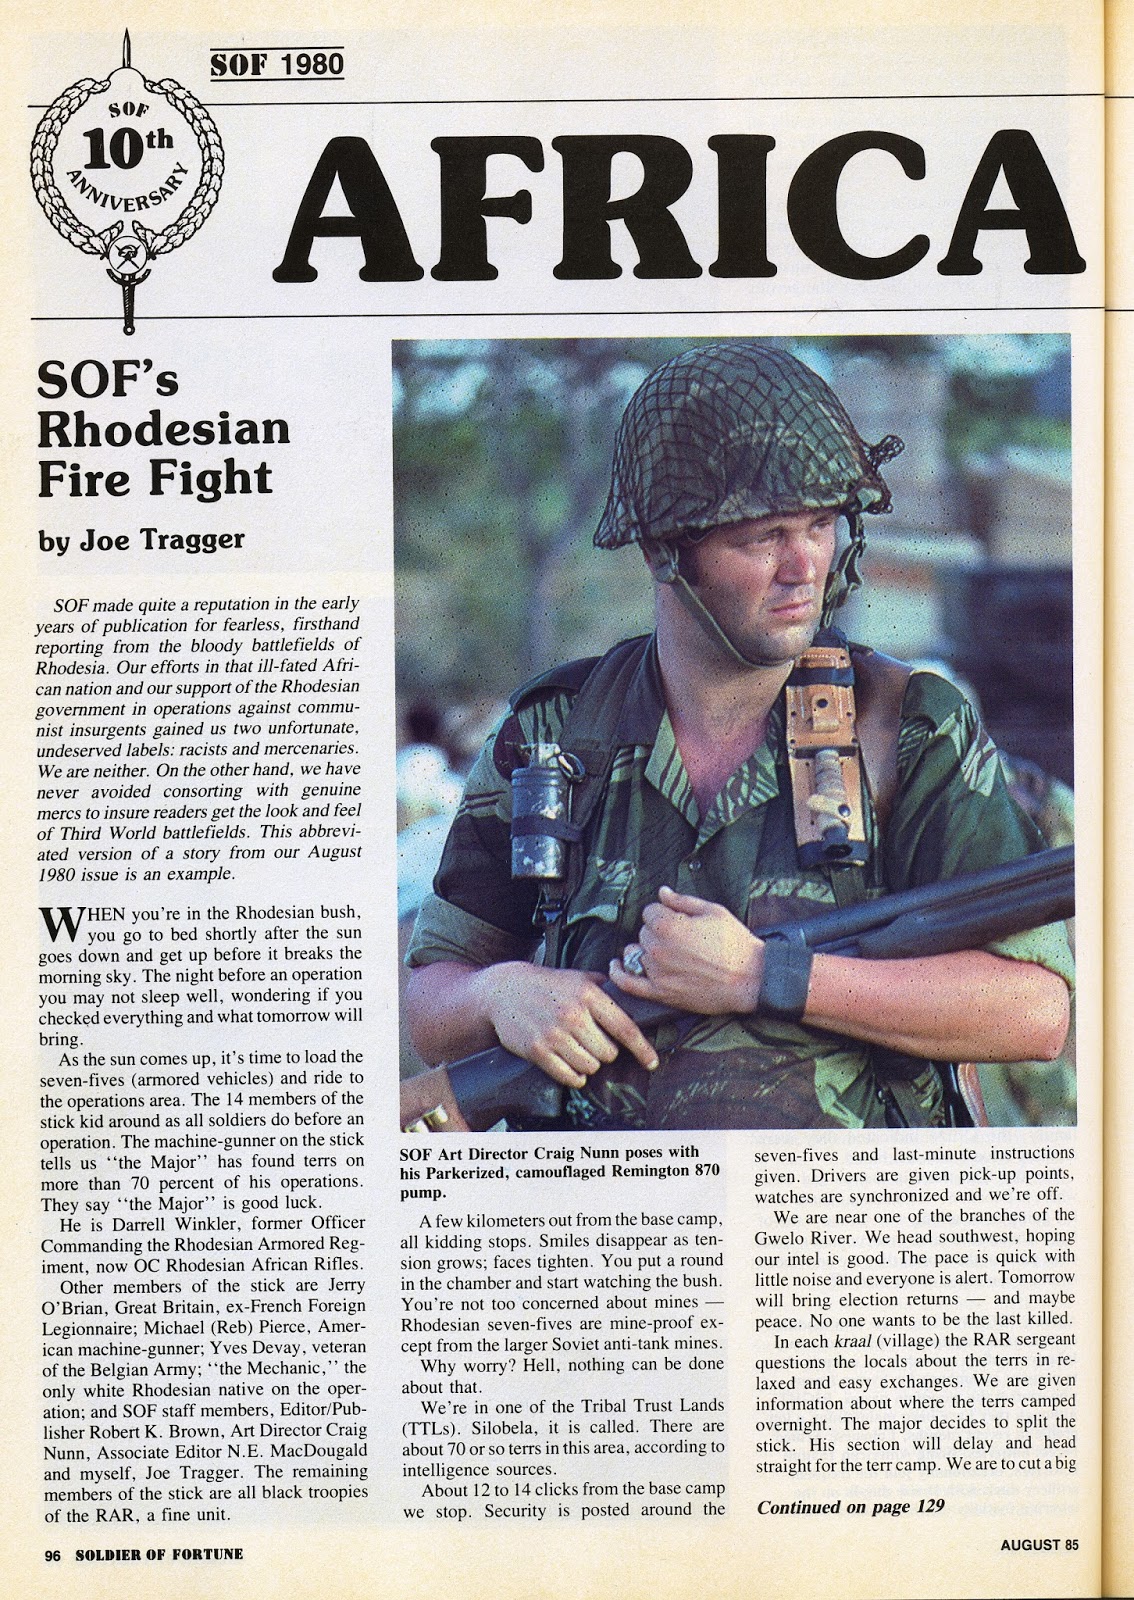 soldier of fortune magazine rhodesia